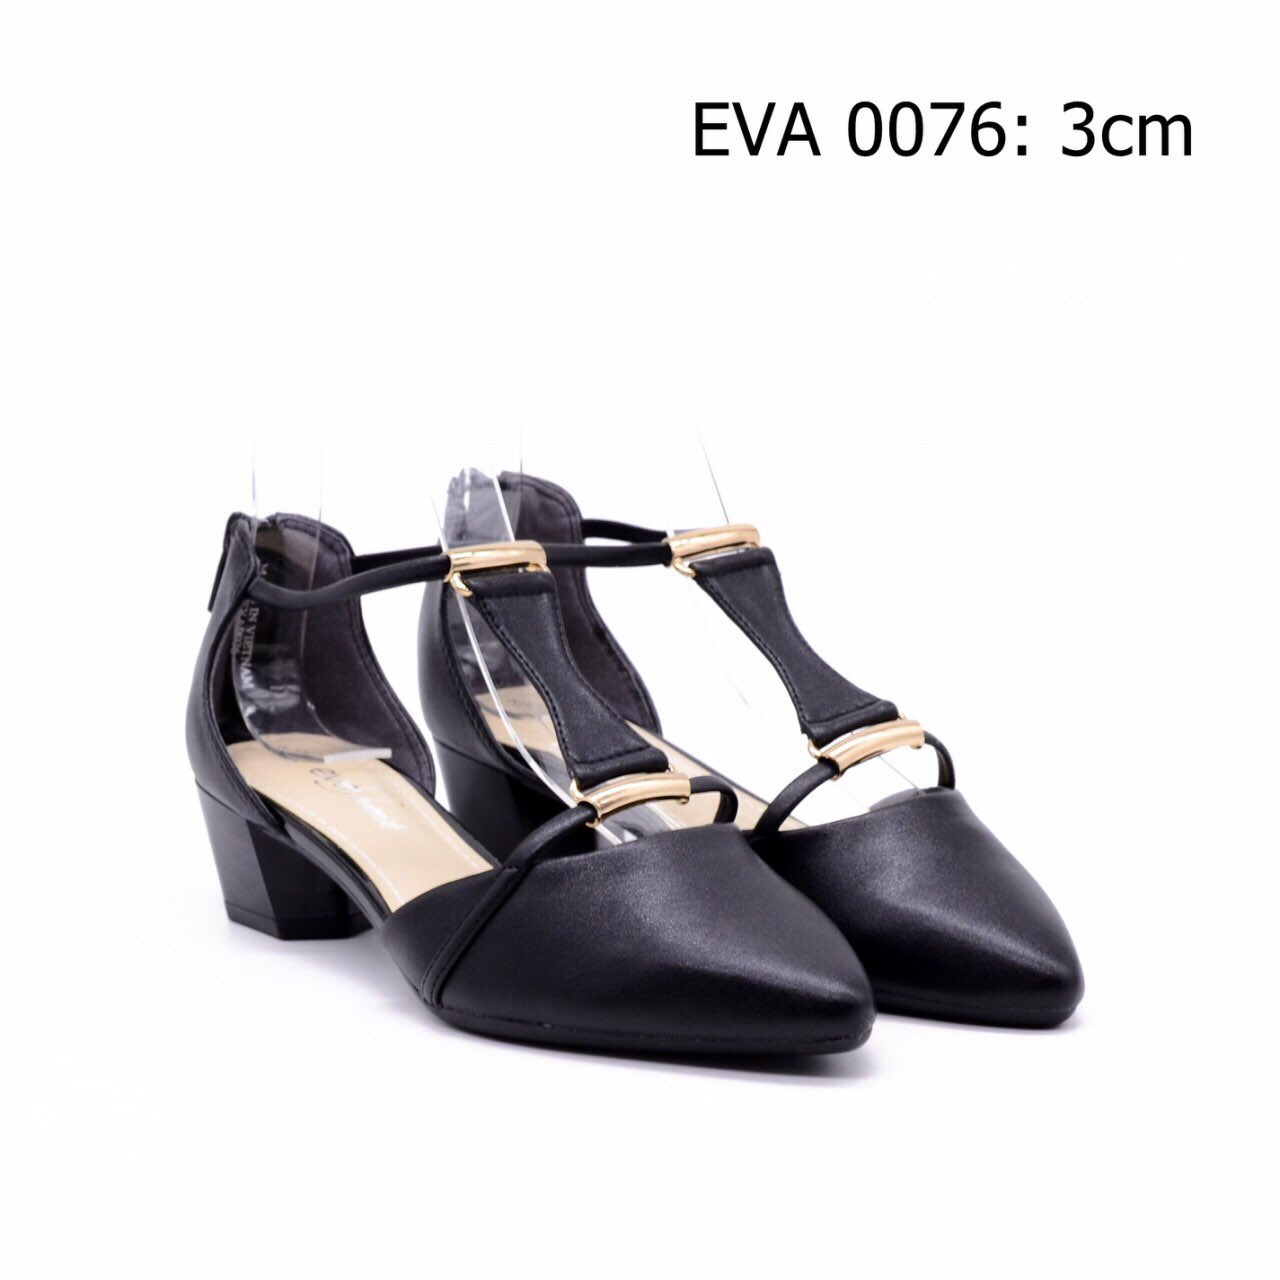 Giày sandal bít mũi EVA0076 cao 3cm